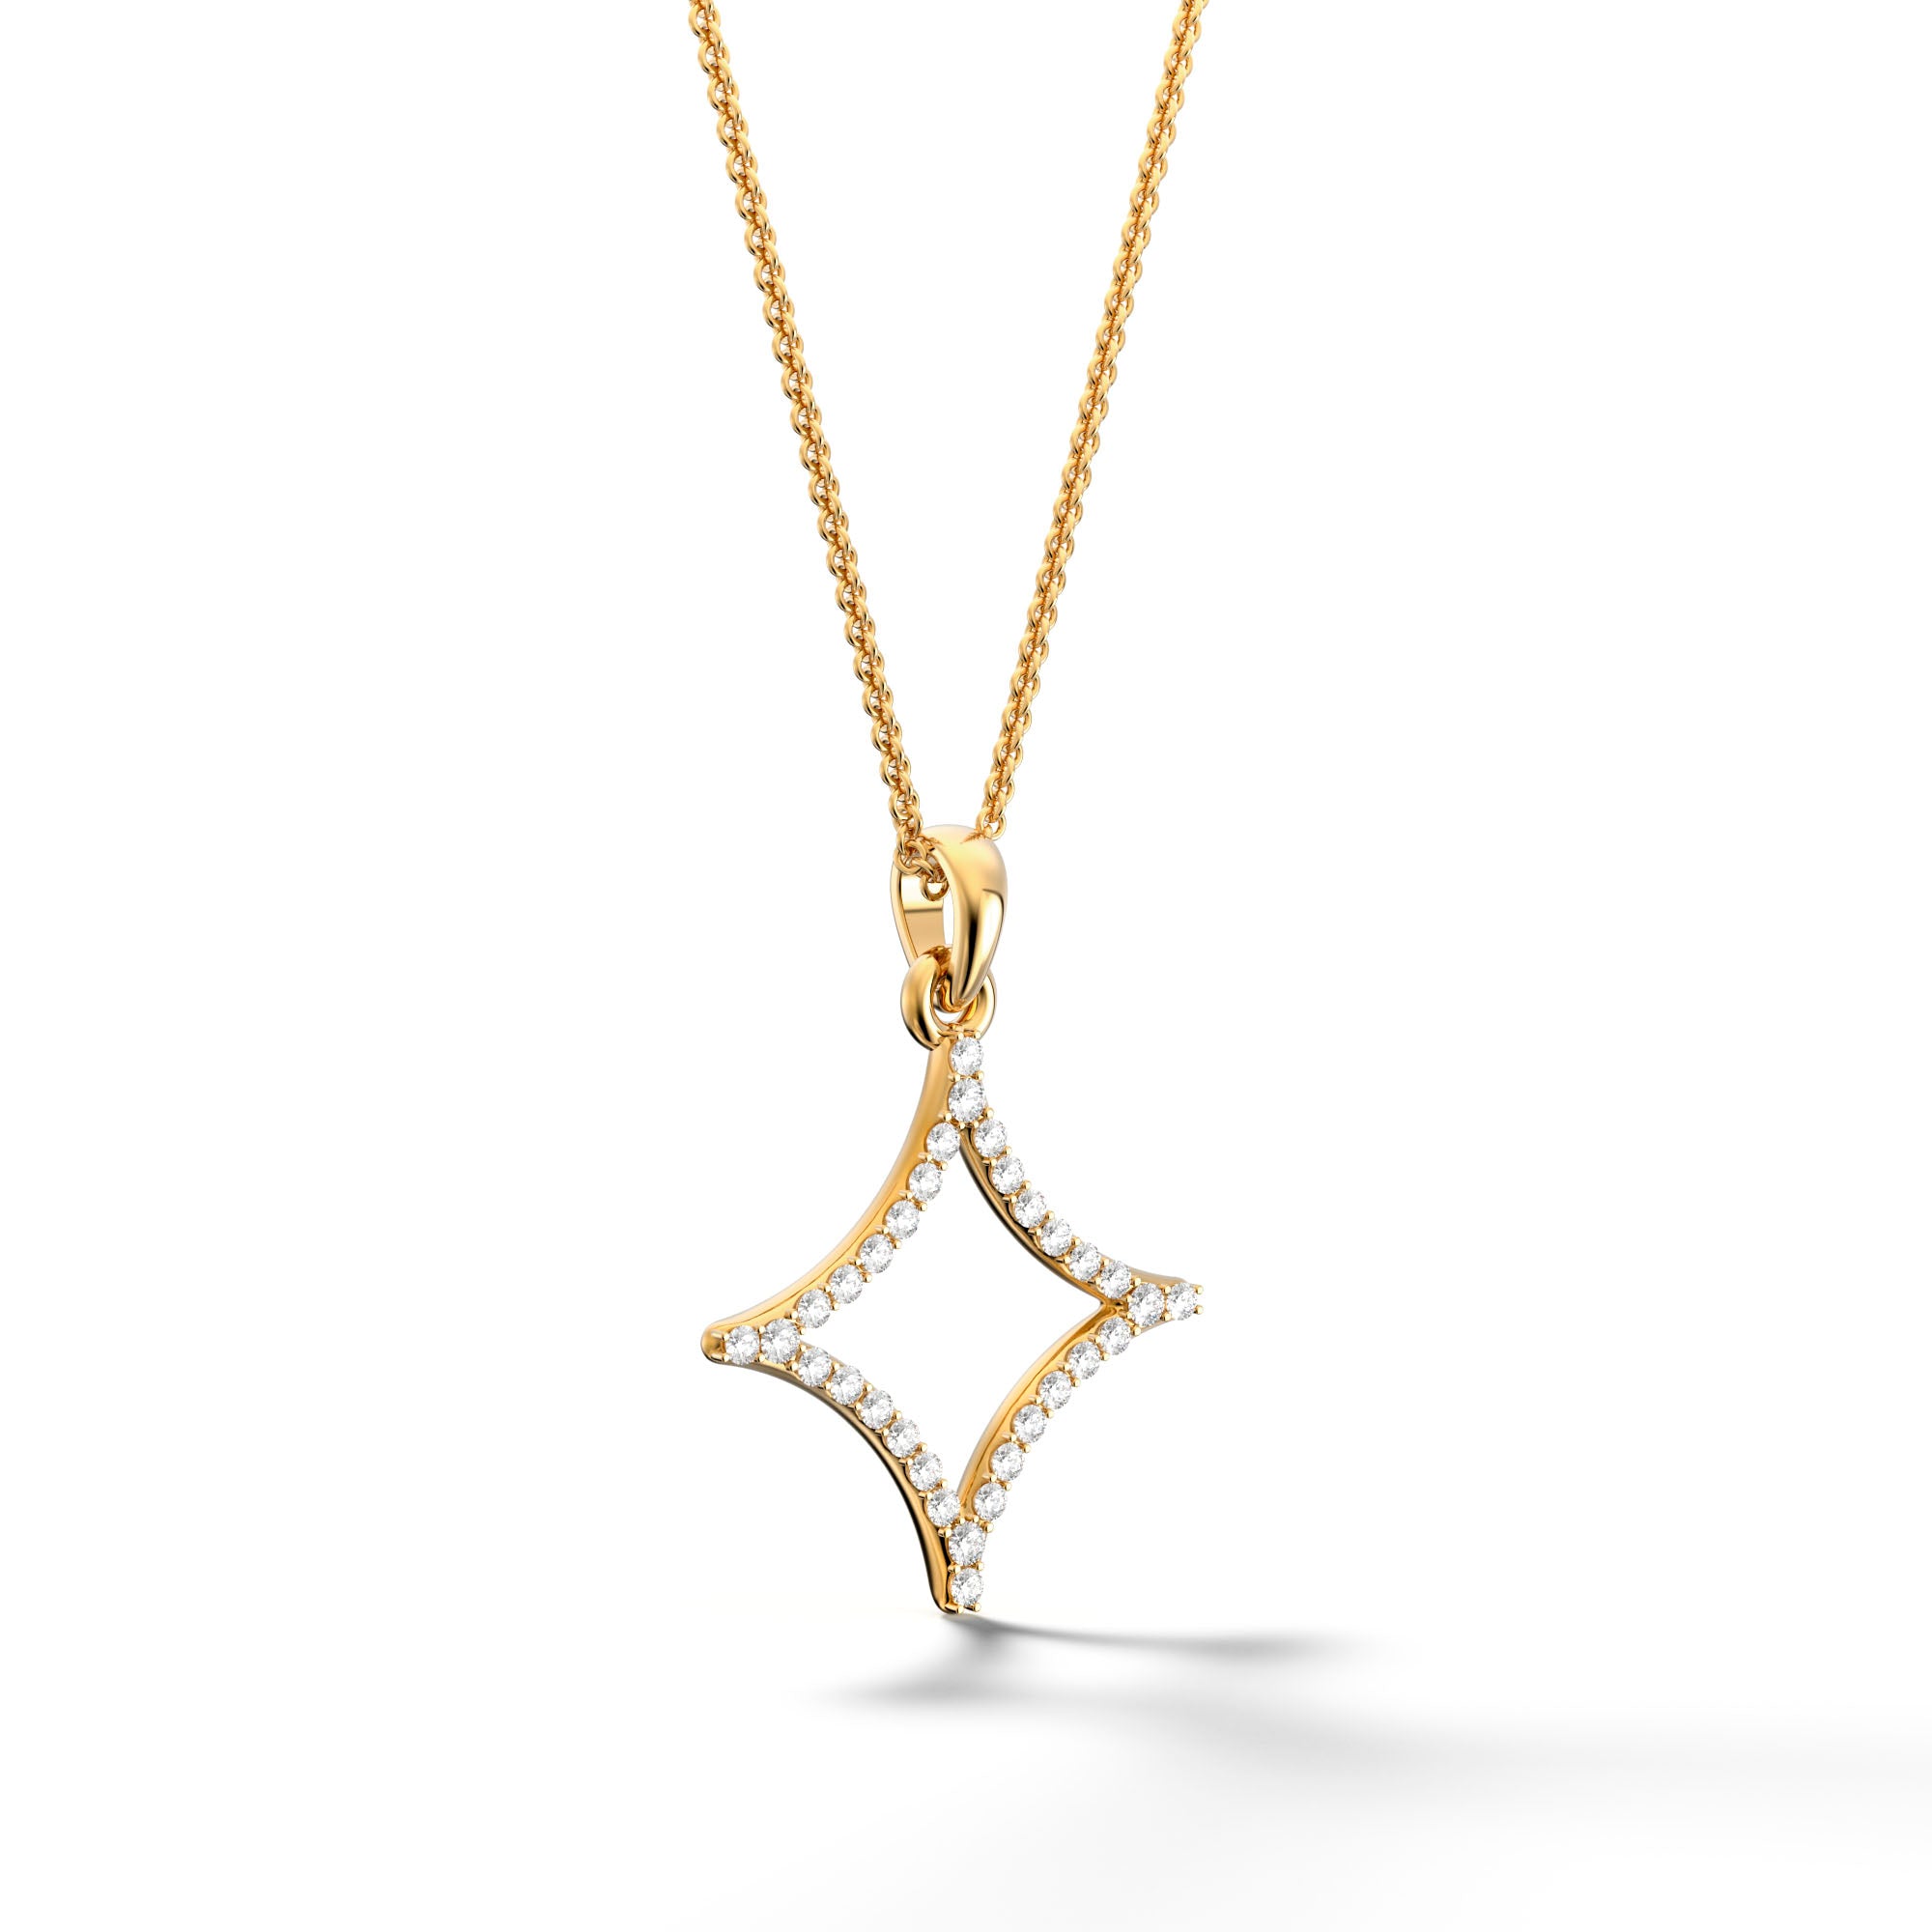 Csillag Sirius - Yellow Gold Pendant with Diamonds Necklace - Csilla Jewelry